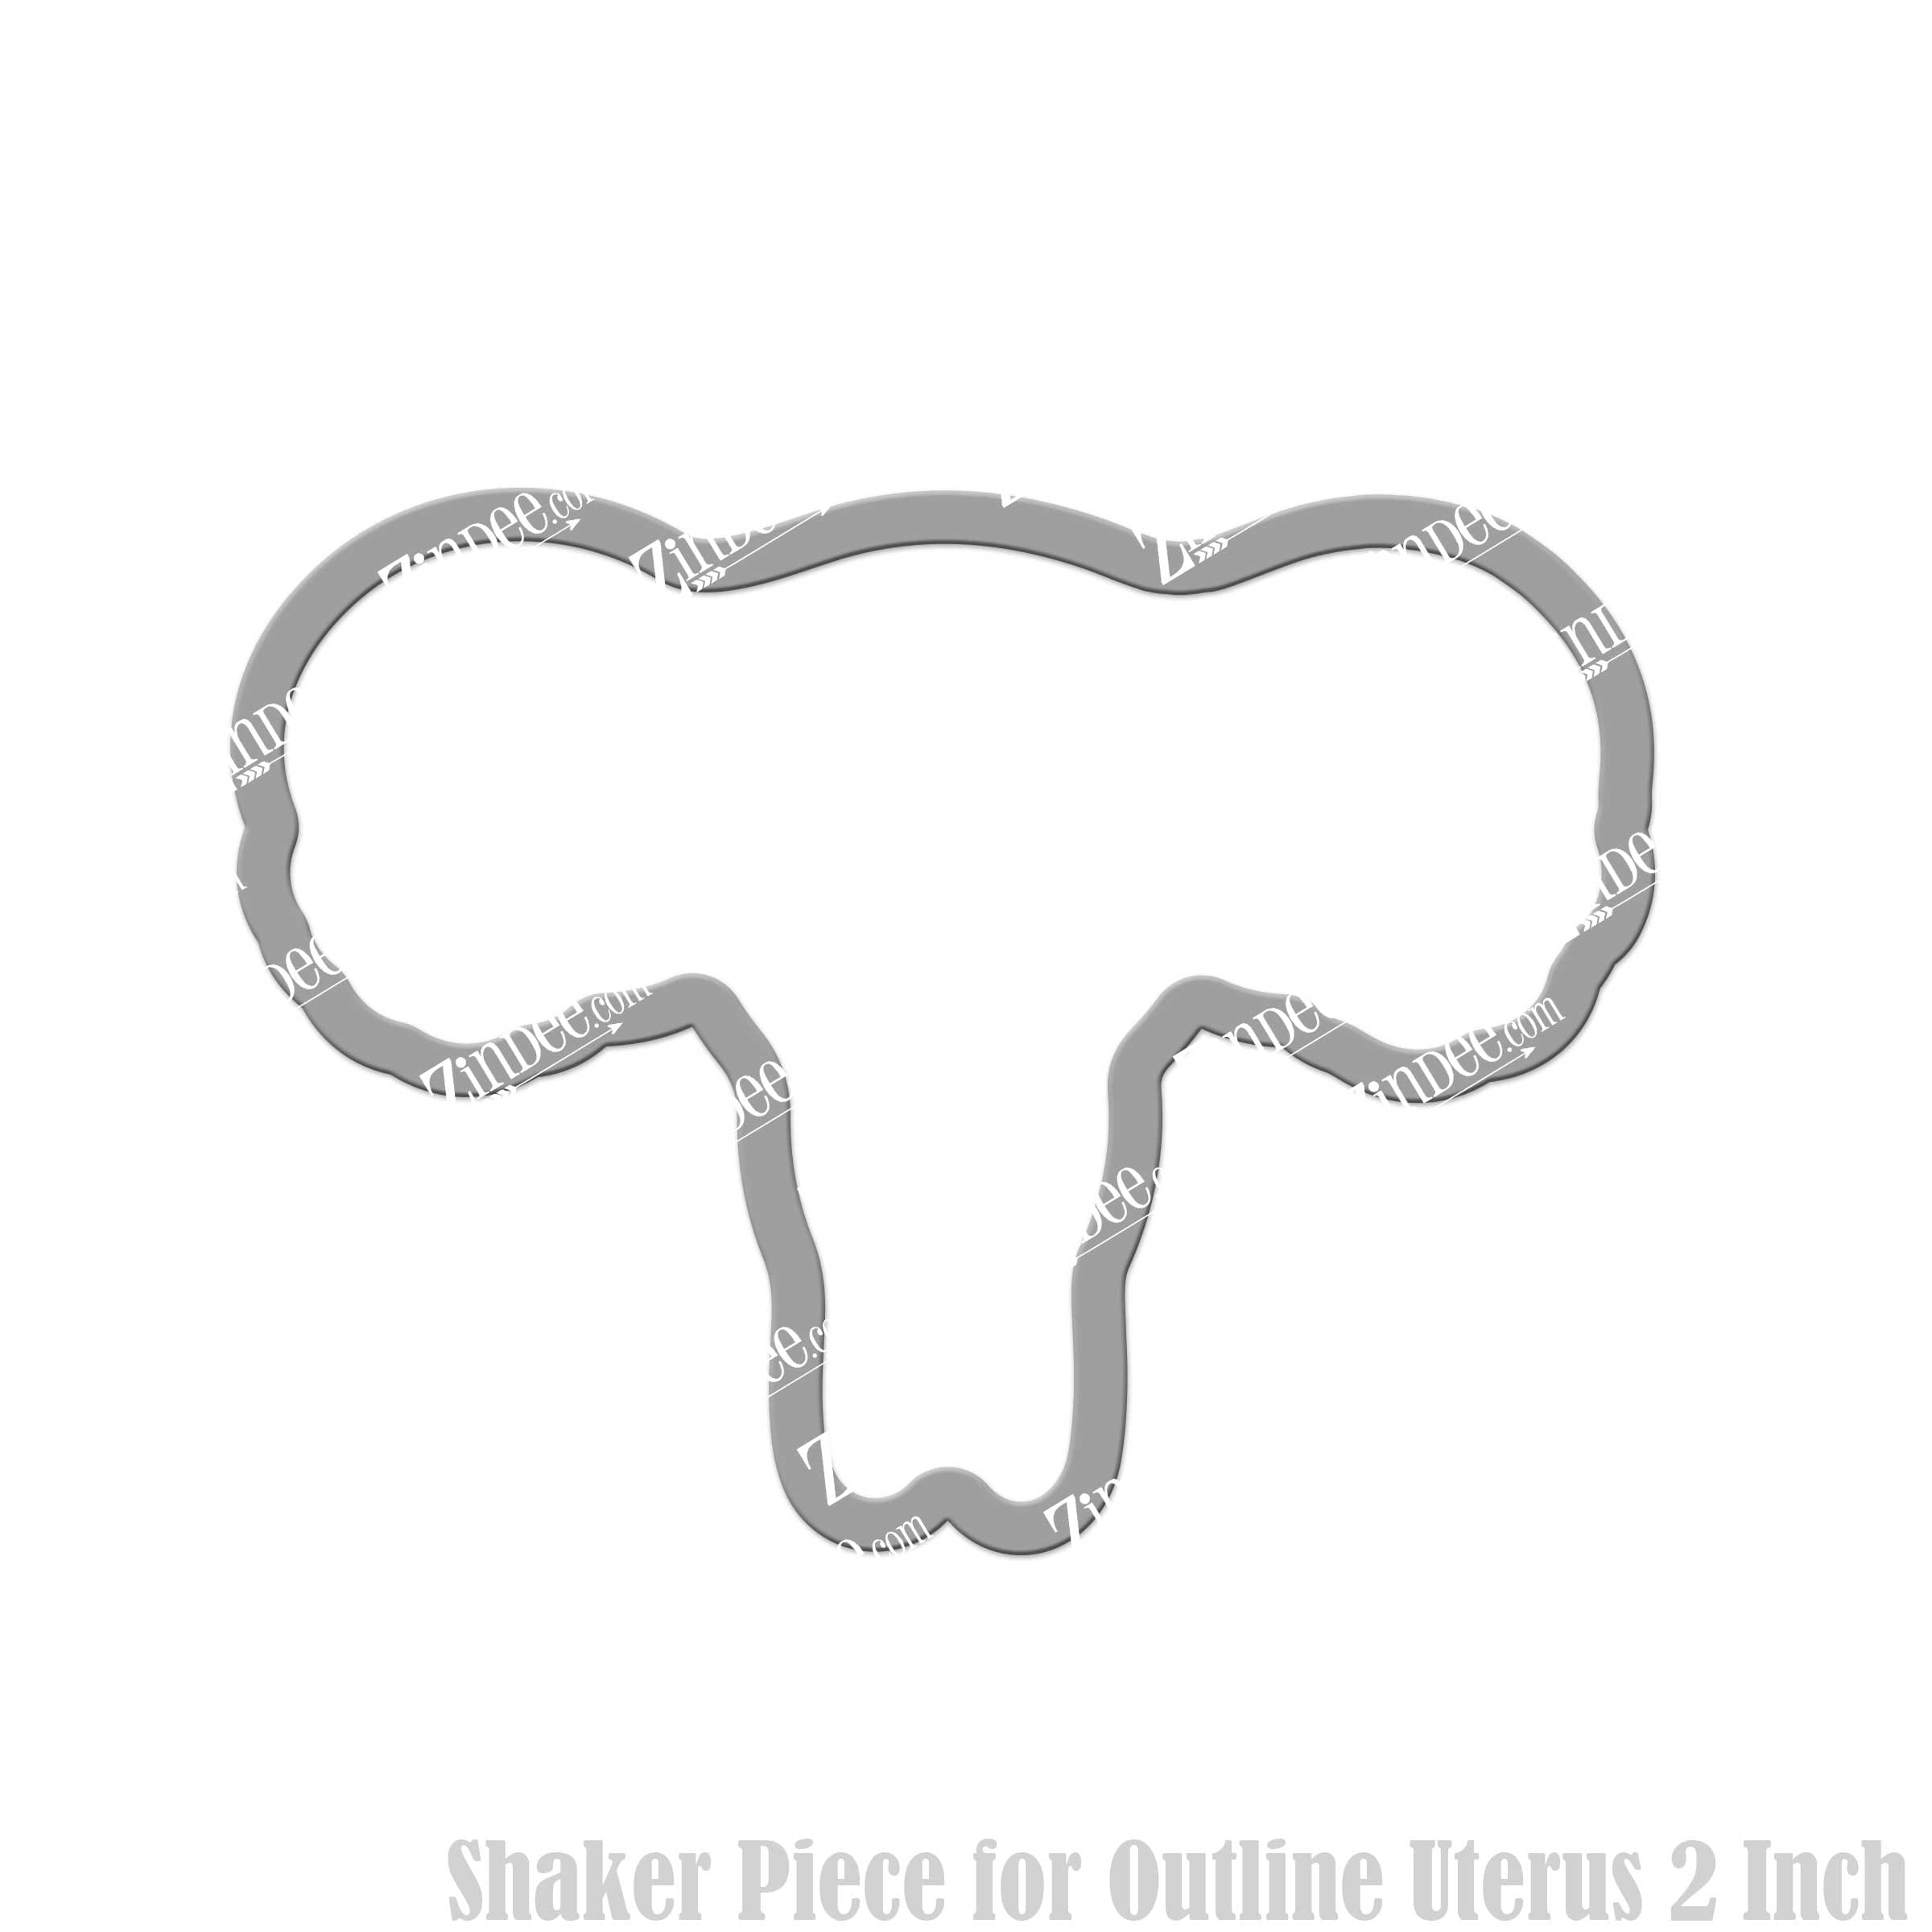 Outline Uterus Shaker Piece (2 inch)